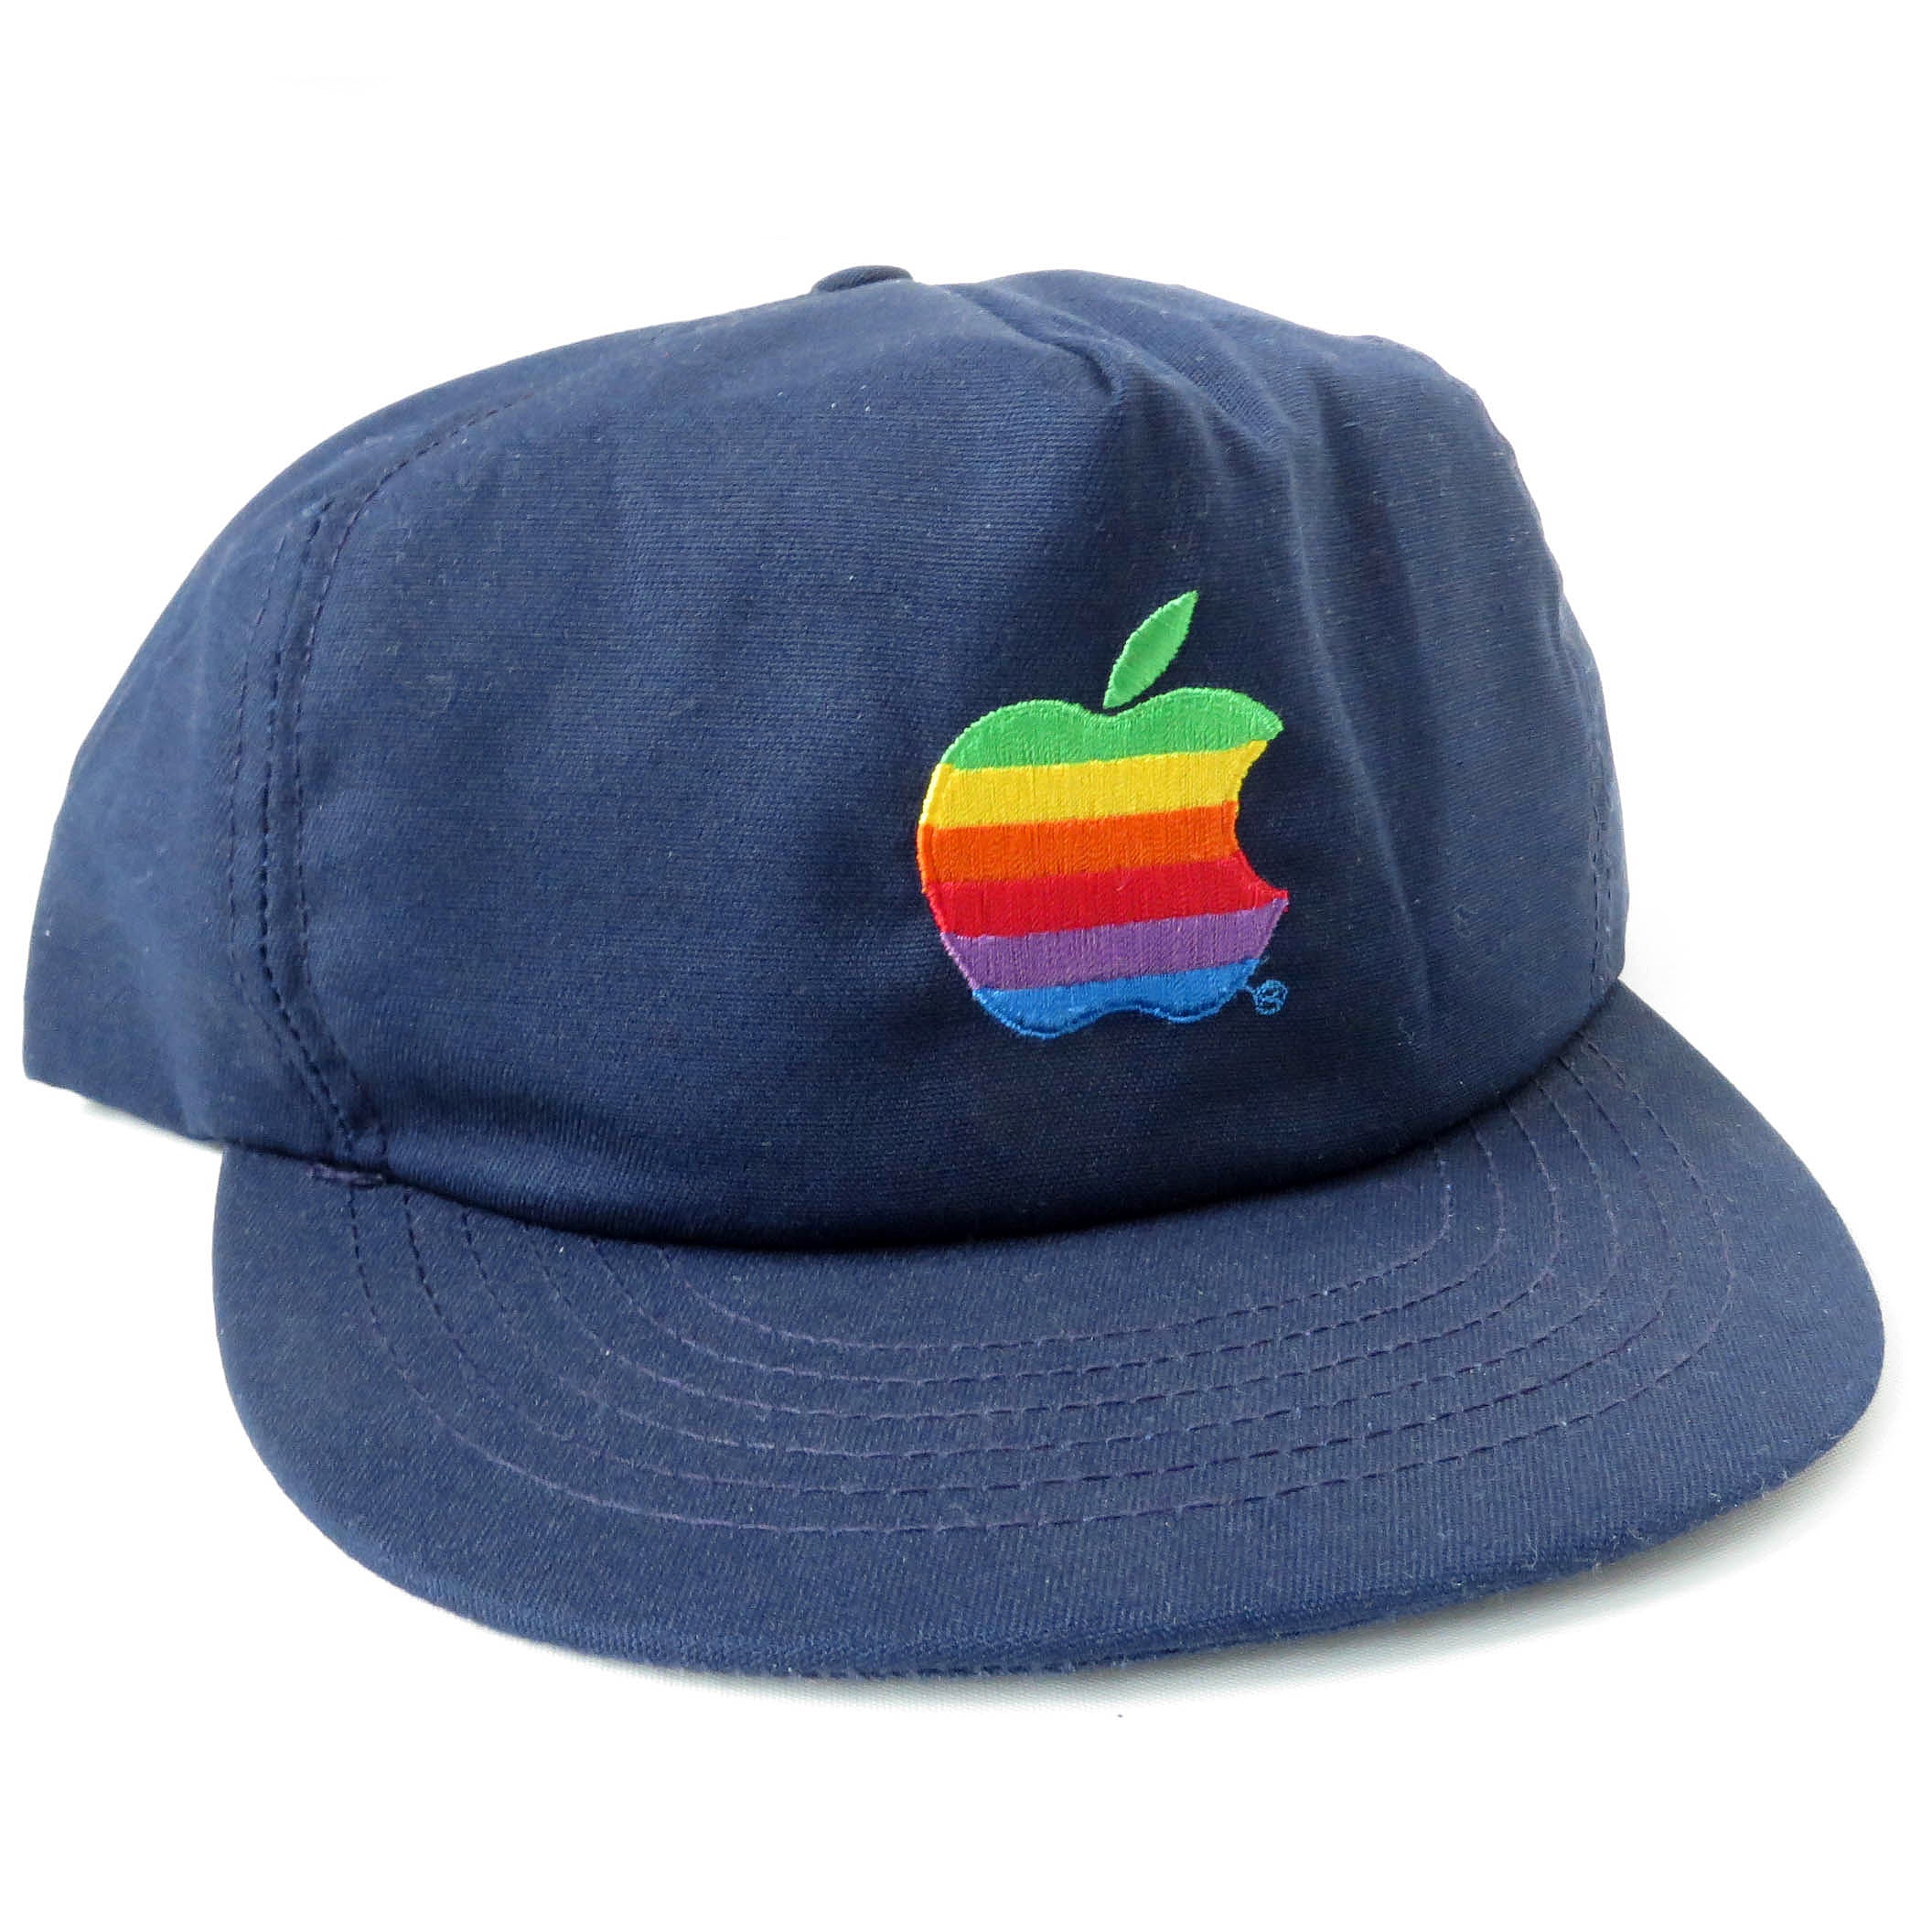 Vintage Apple Computer Snapback Hat